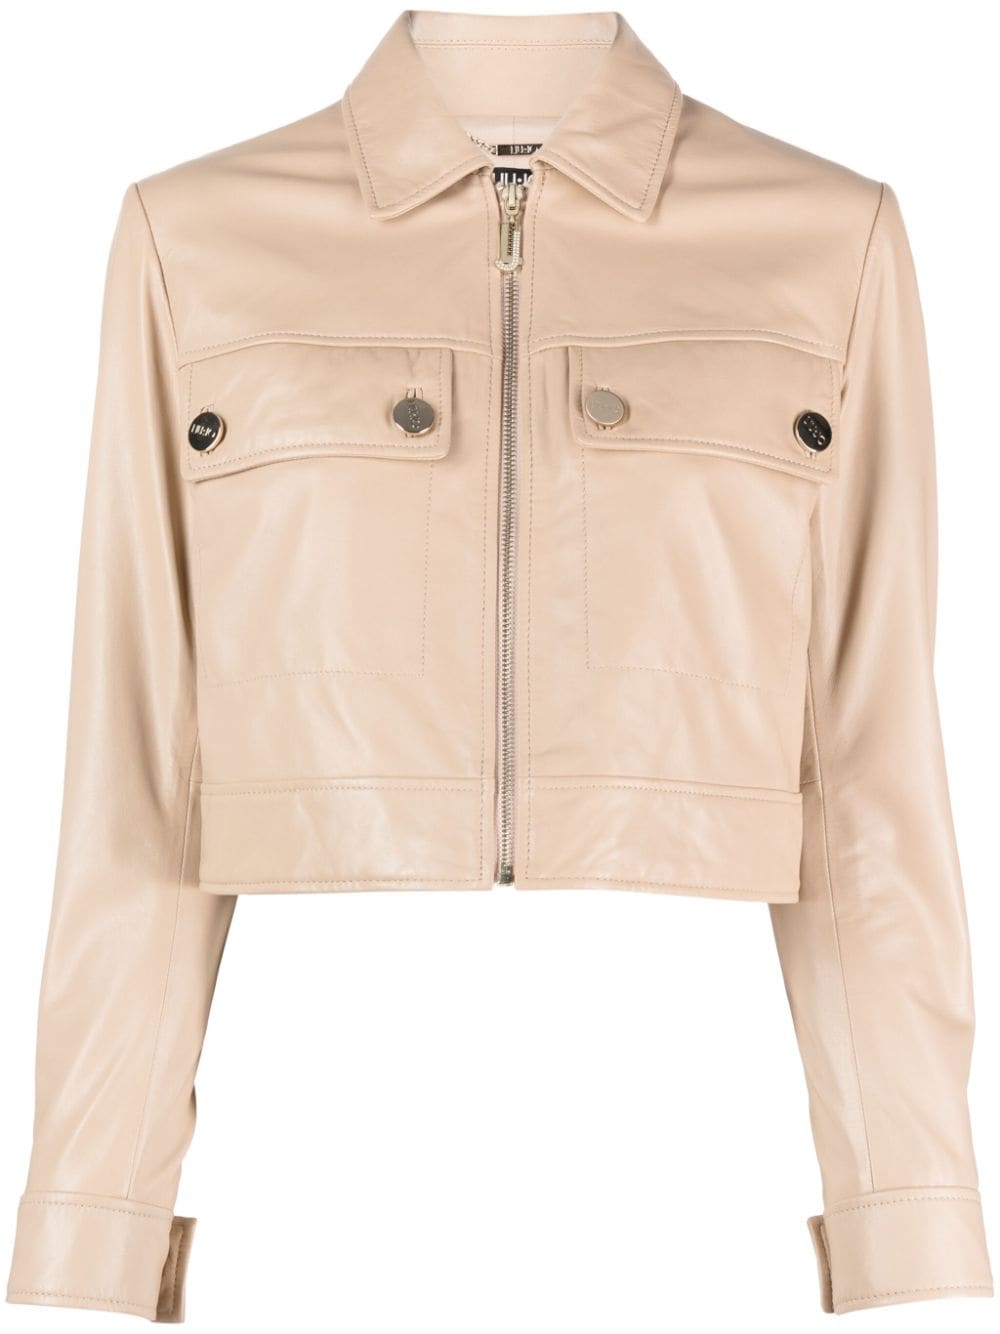 LIU JO Cropped Leather Jacket - Farfetch